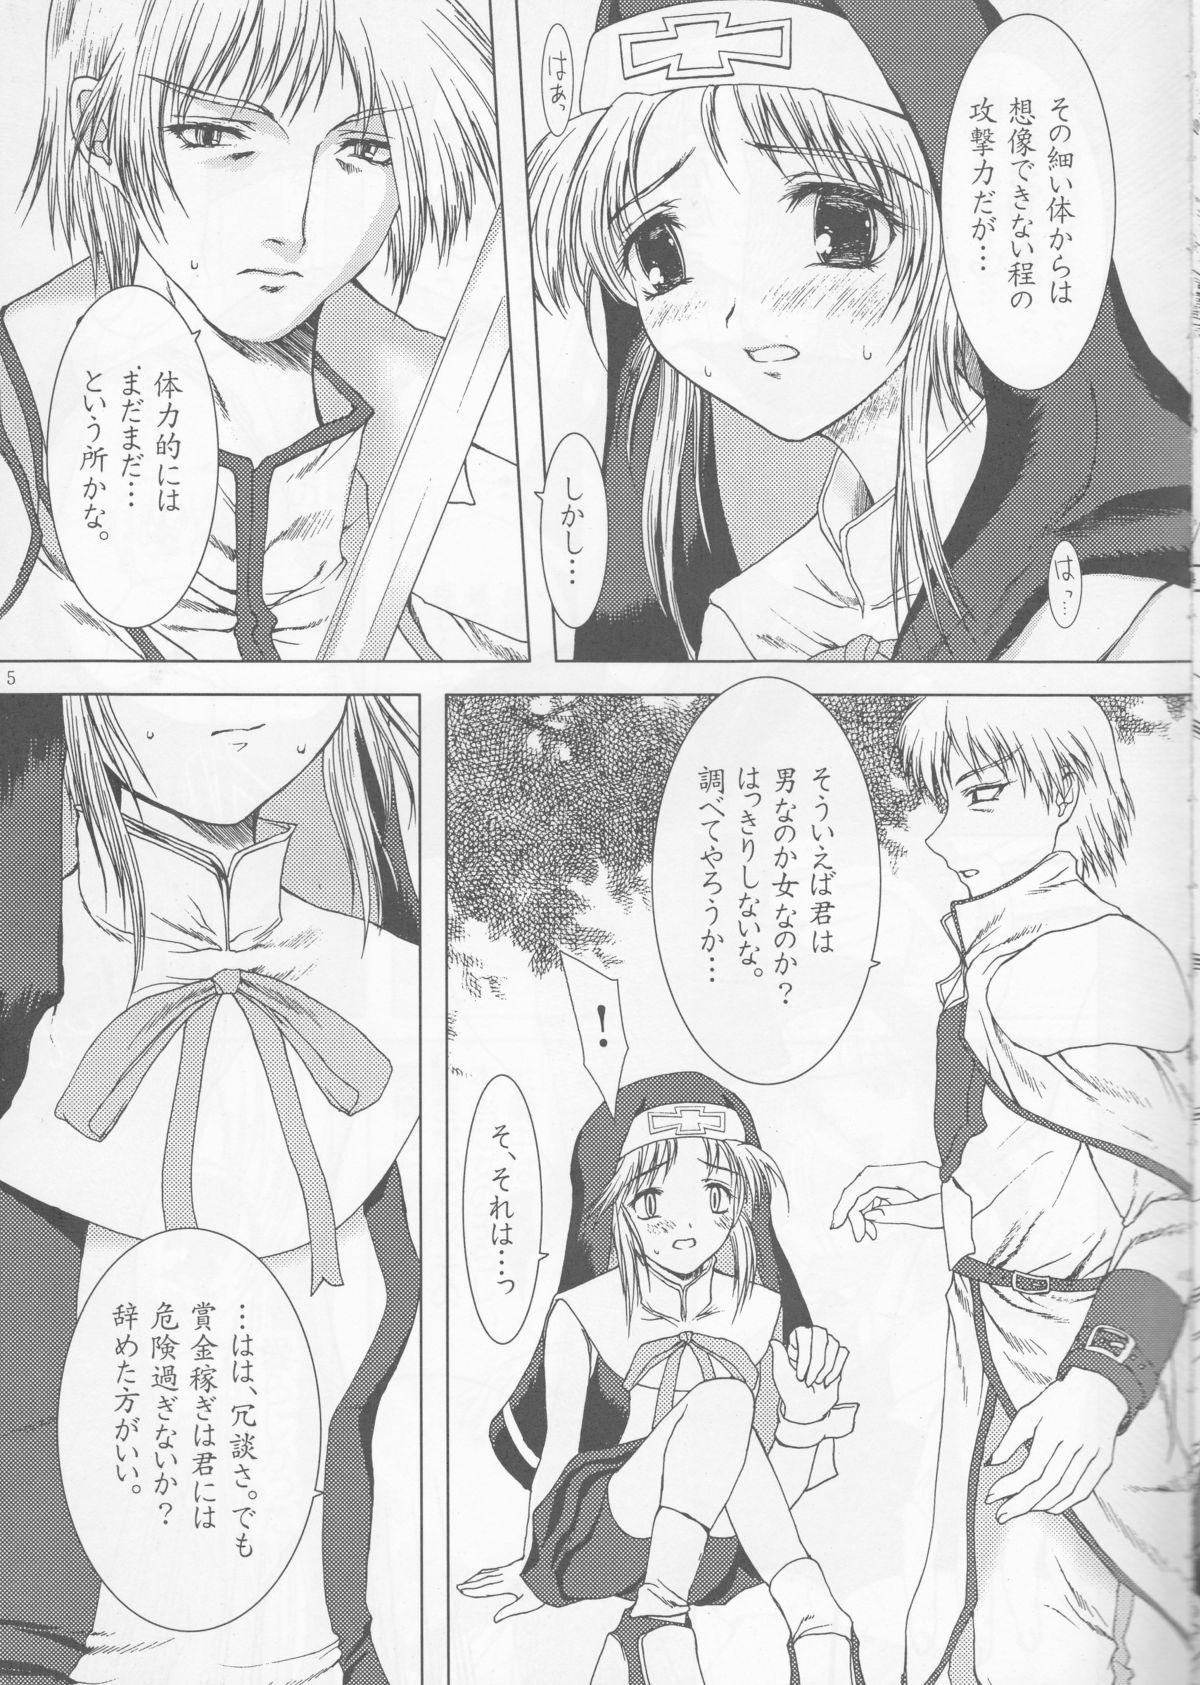 Lovers Uchi ga Maketara... - Guilty gear Free Amatuer - Page 4